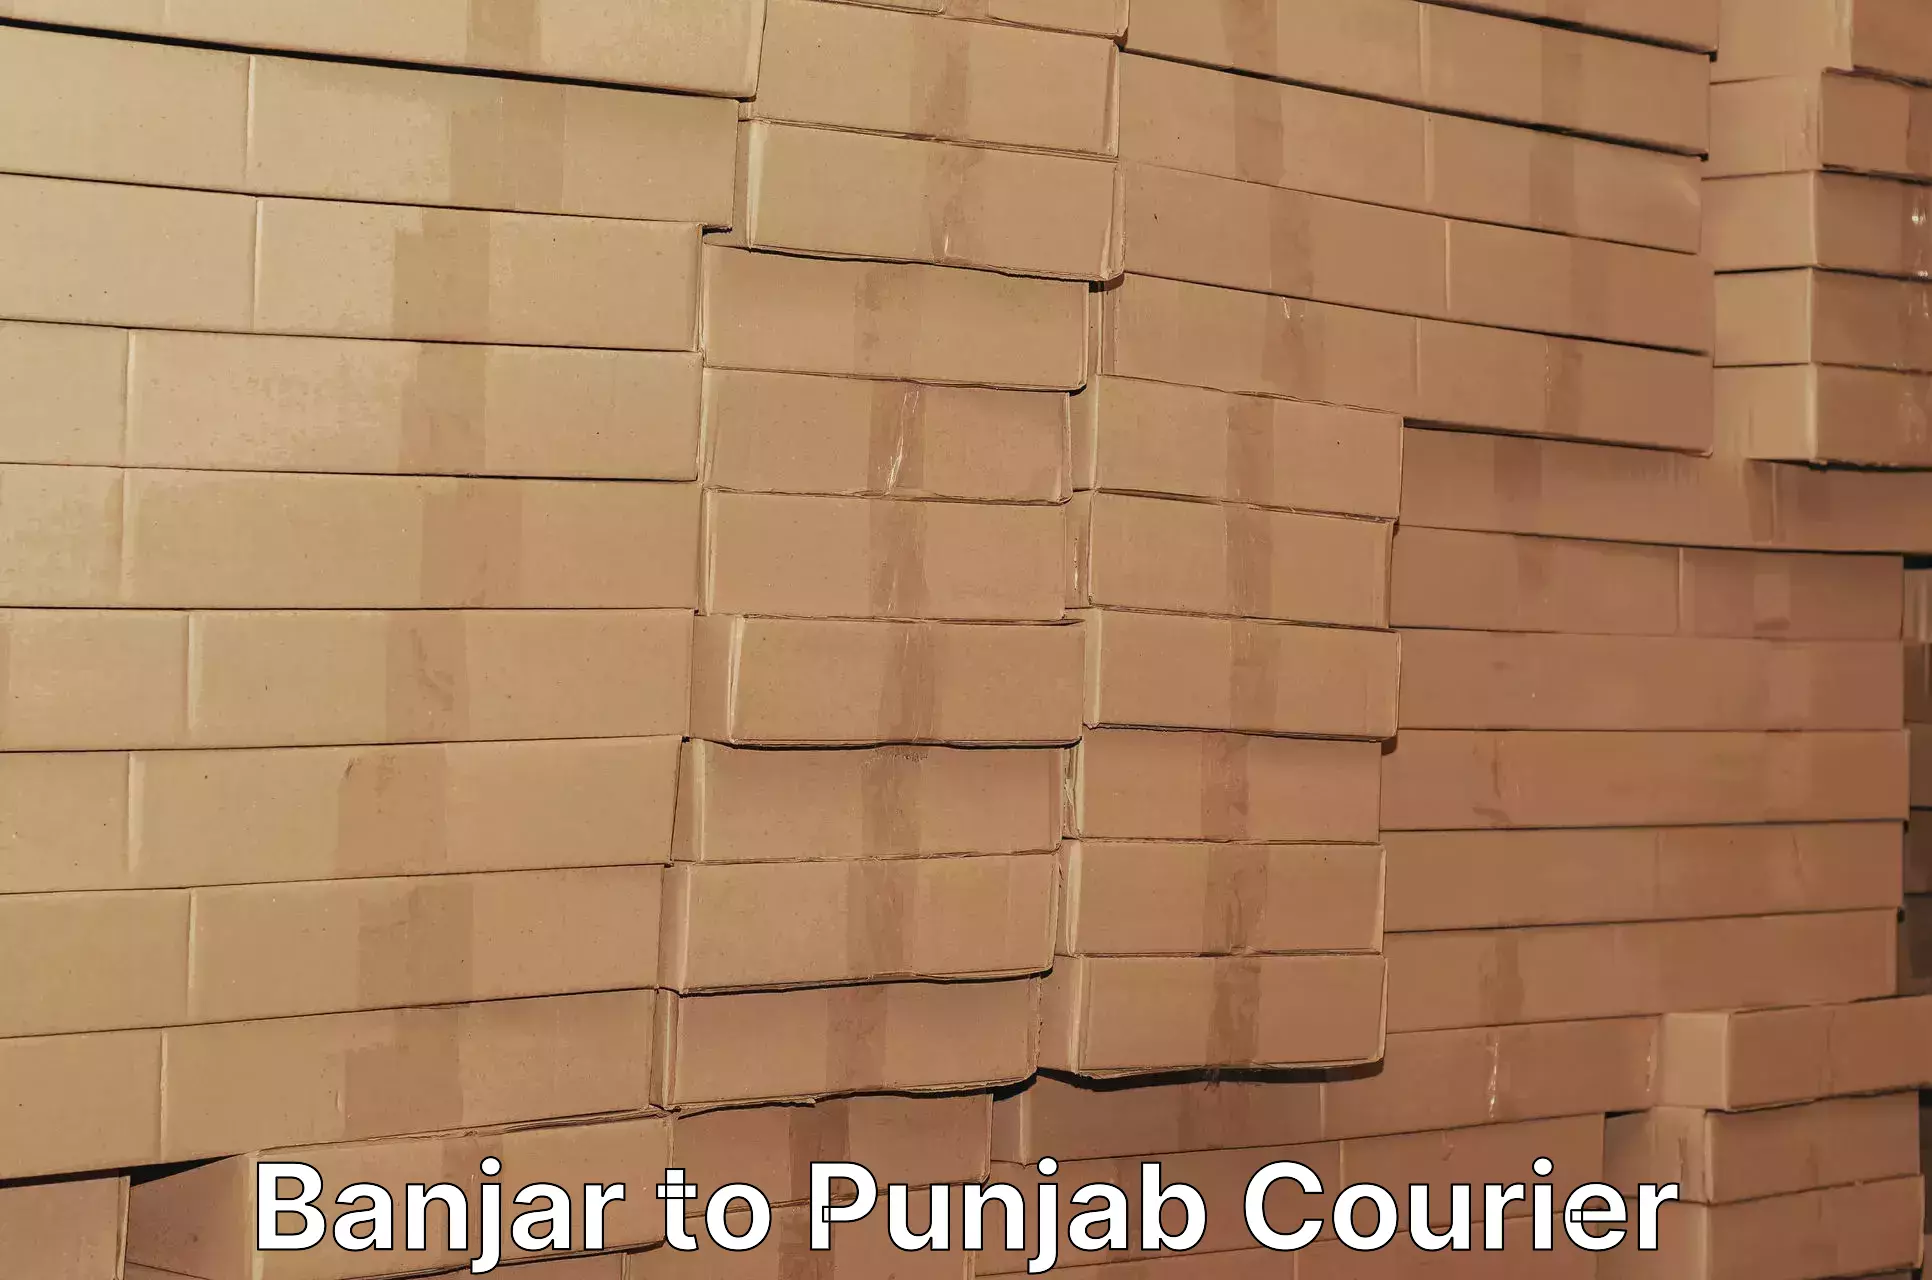 Customer-focused courier Banjar to Amritsar